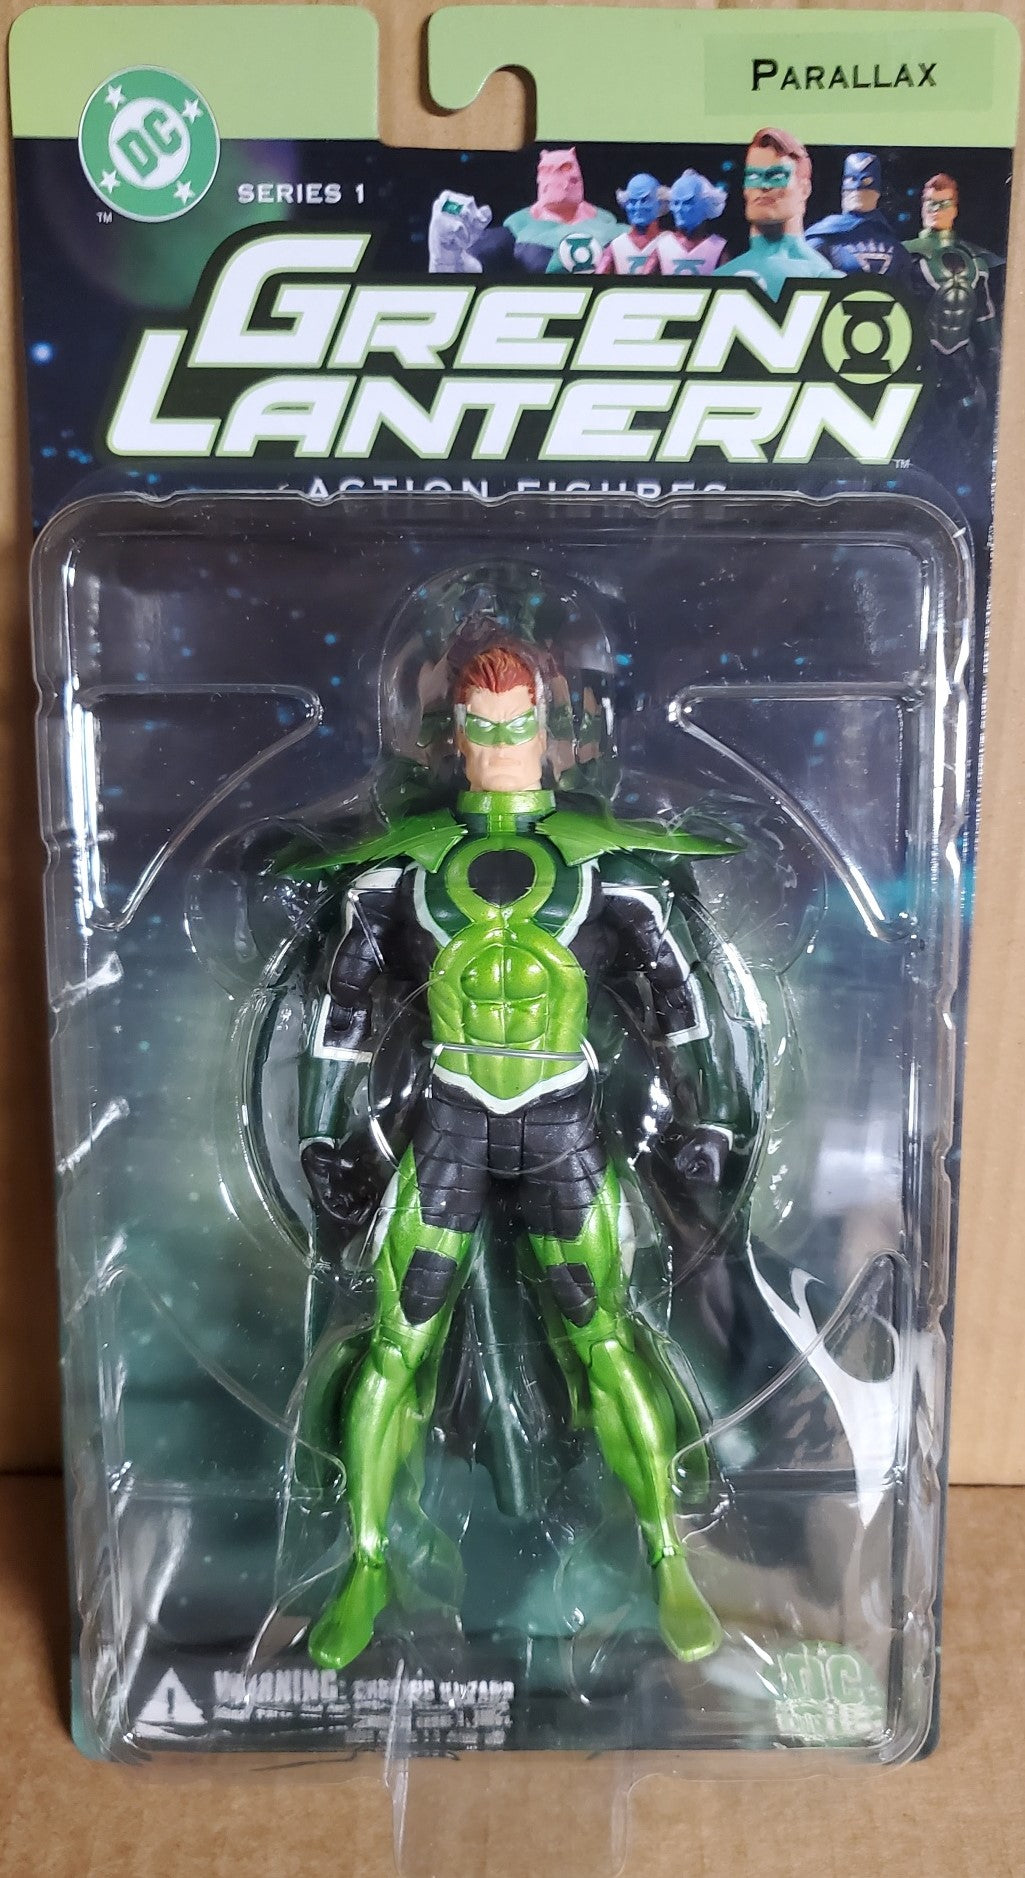 Green Lantern series 1 PARALLAX action figure 